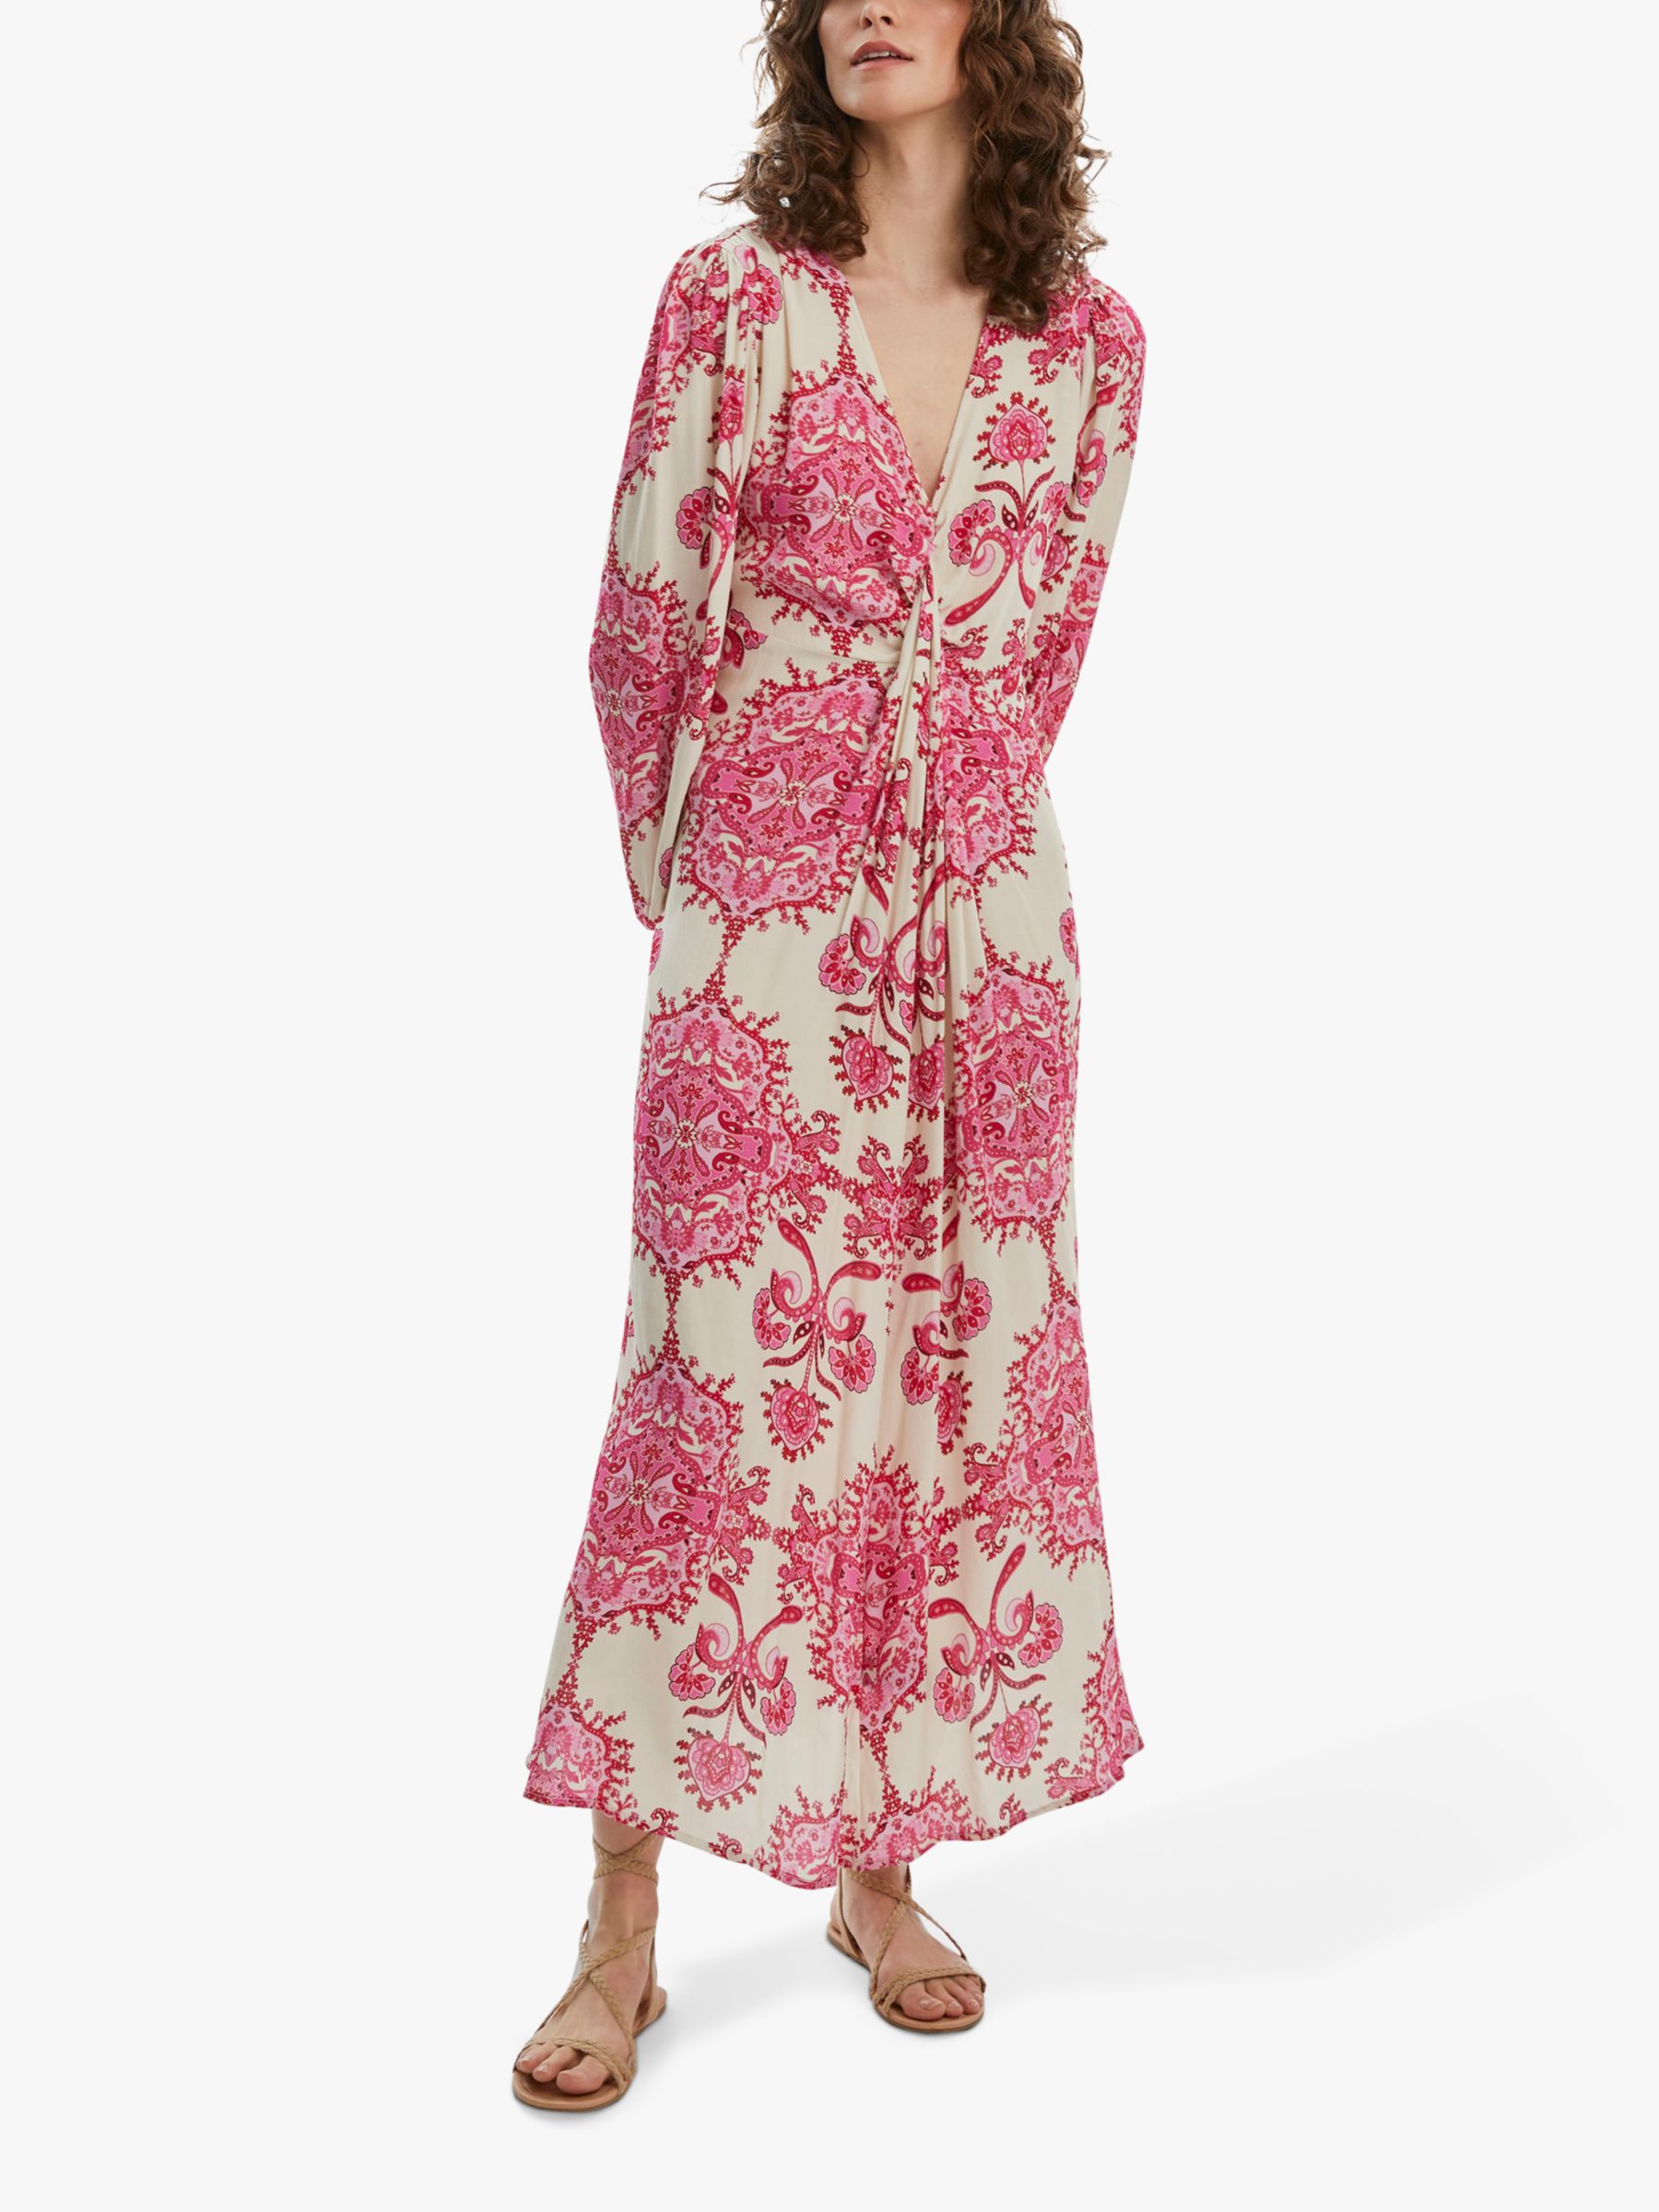 James Lakeland Printed Knot Detail Midi Dress, Pink, 8